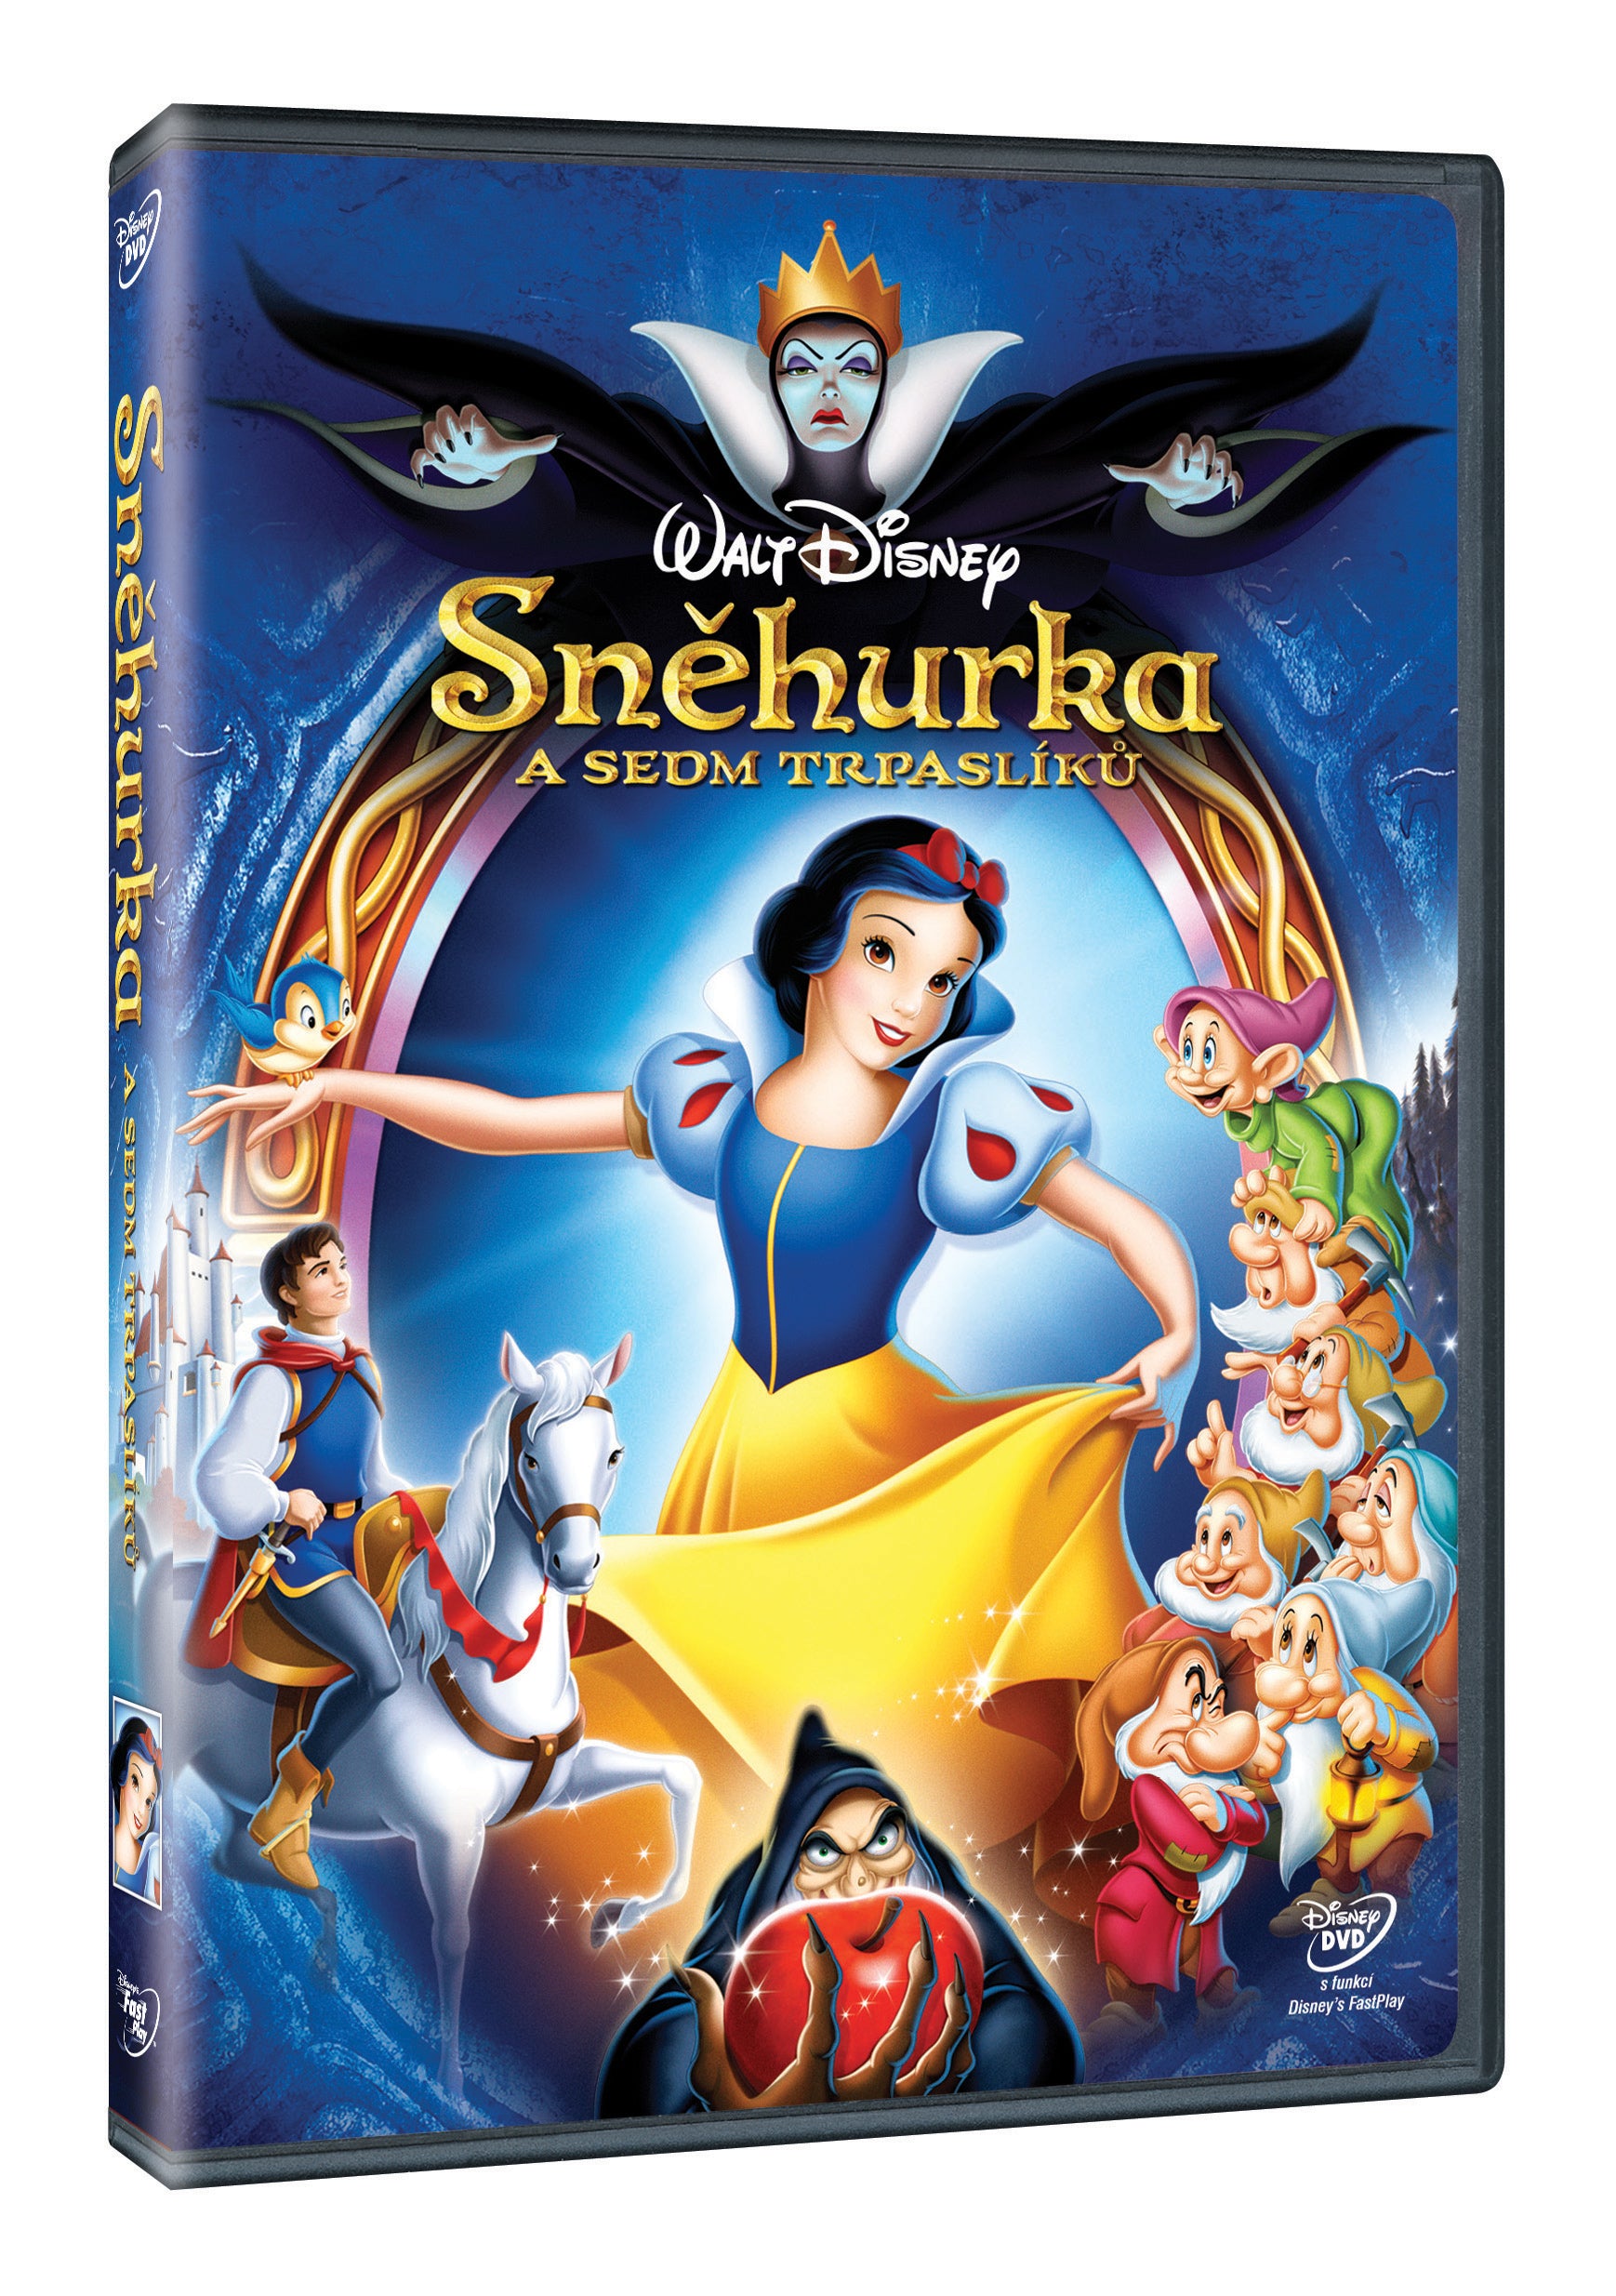 Snehurka a sedm trpasliku DVD / Snow White